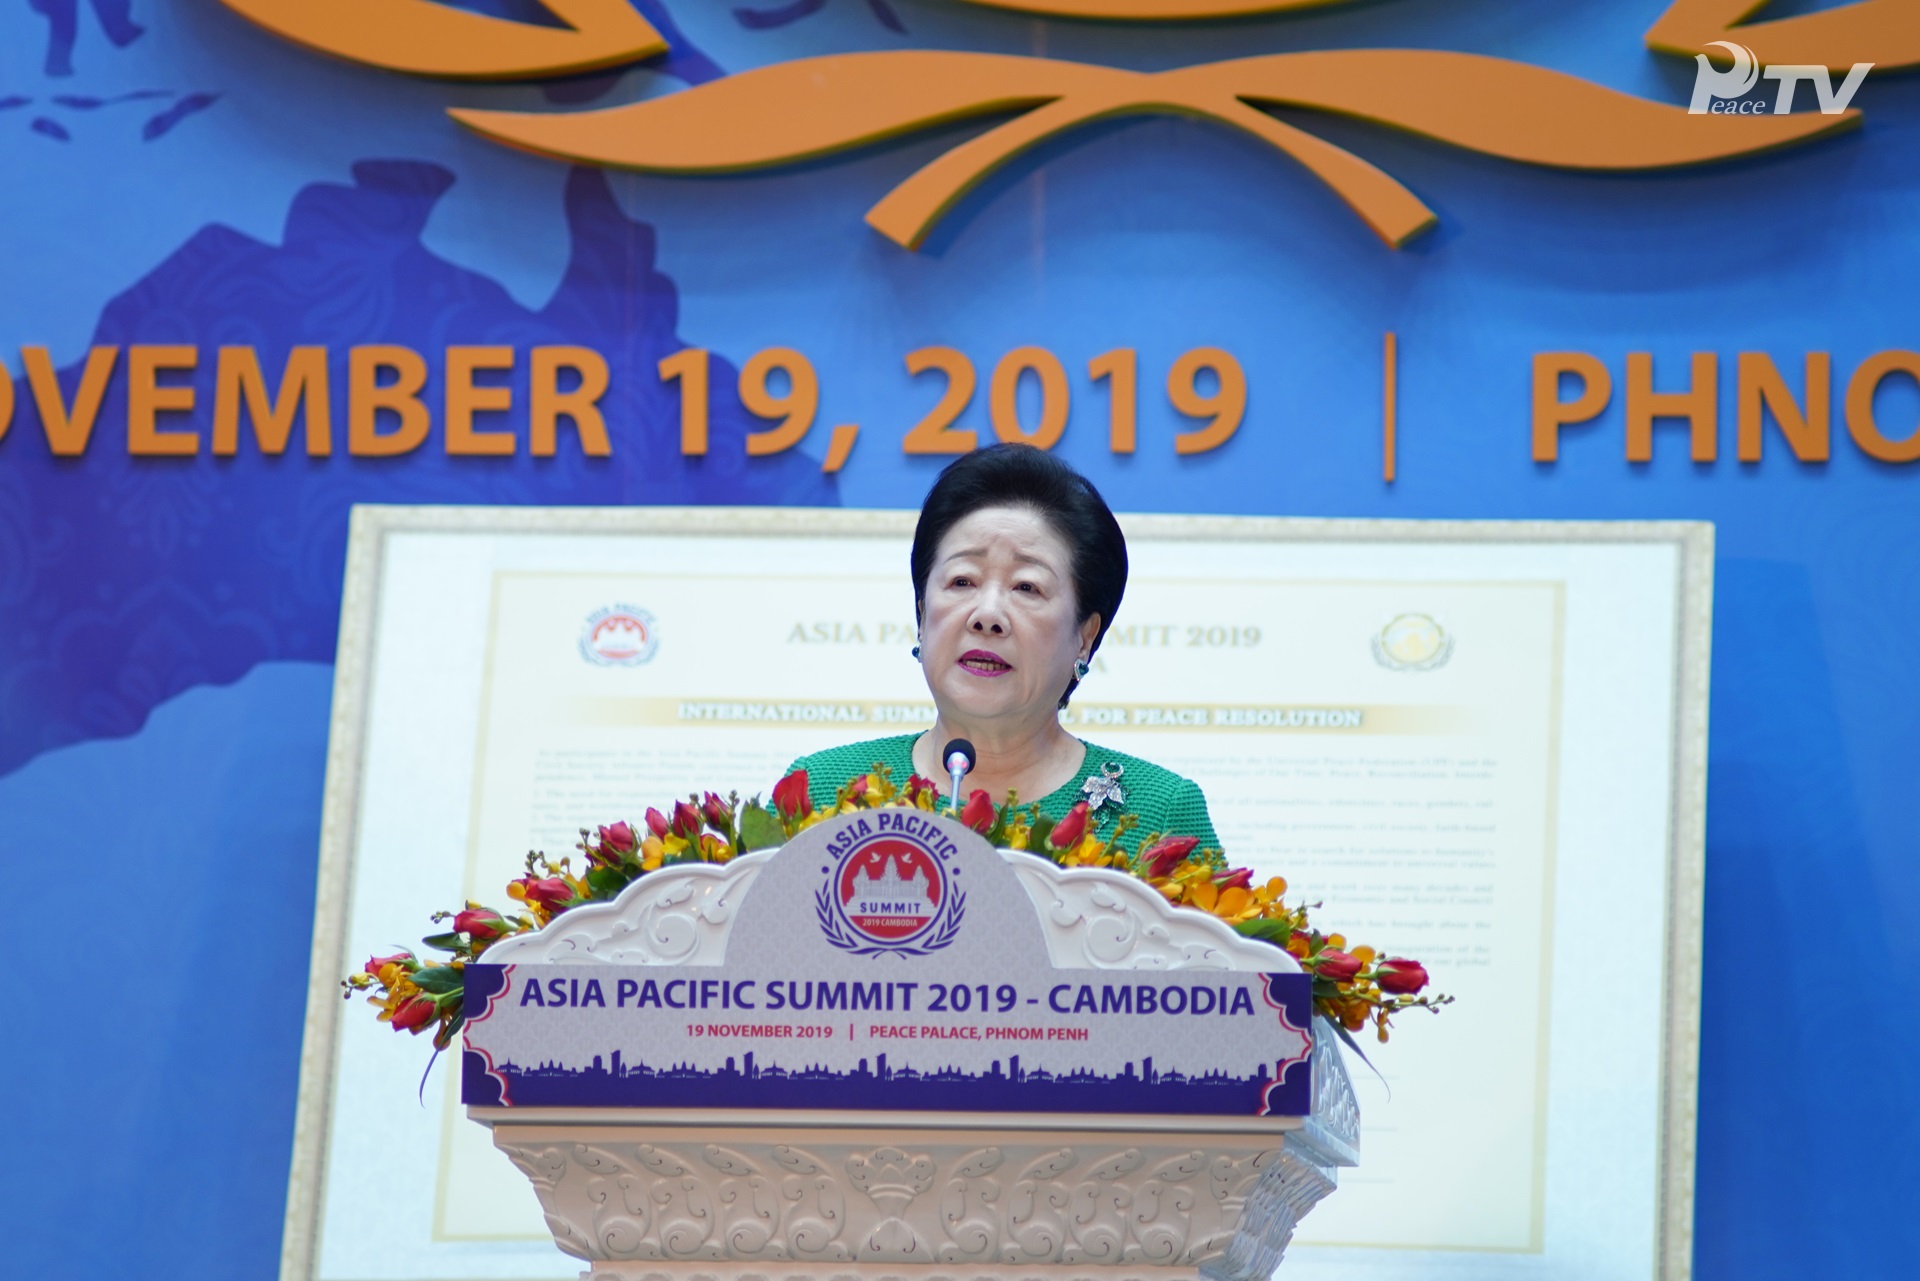 Asia Pacific Summit 2019 - Cambodia(19th of November)Cambodia Peace Palace